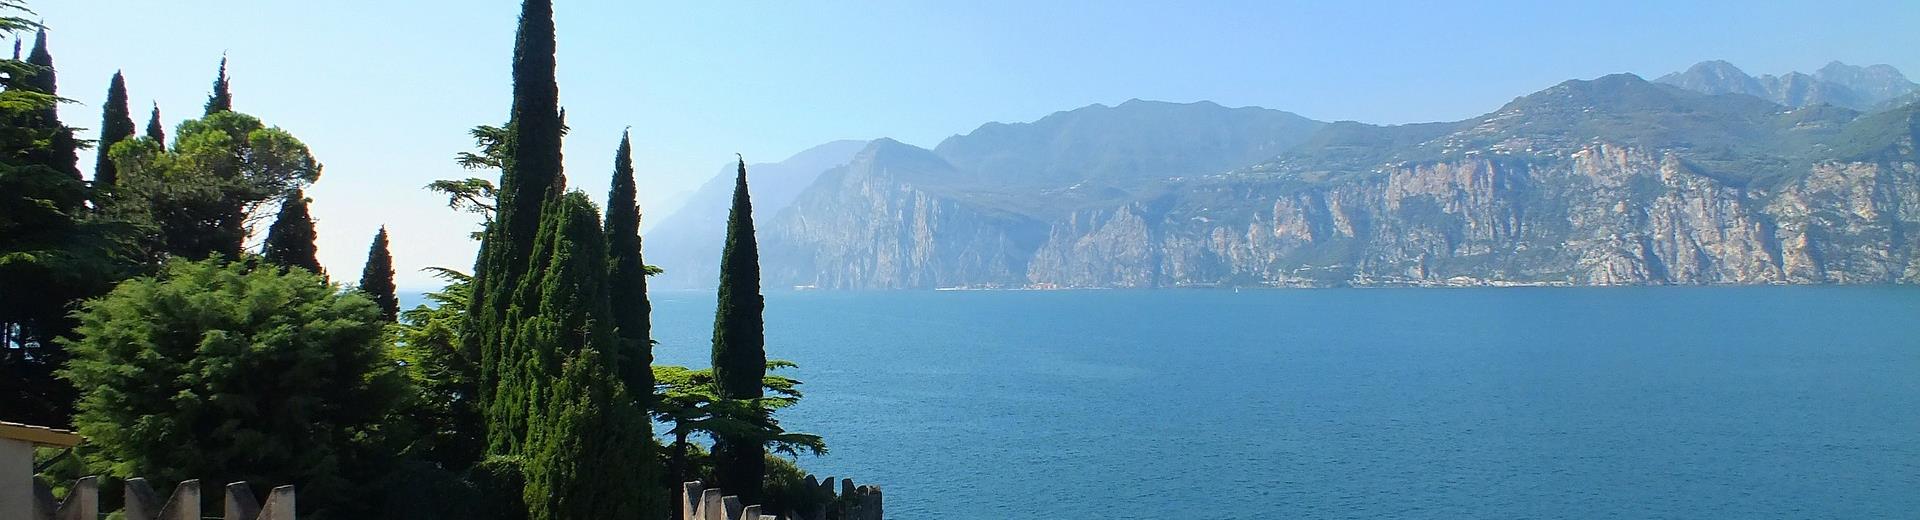 Best Western Hotel Turismo, near Lake Garda